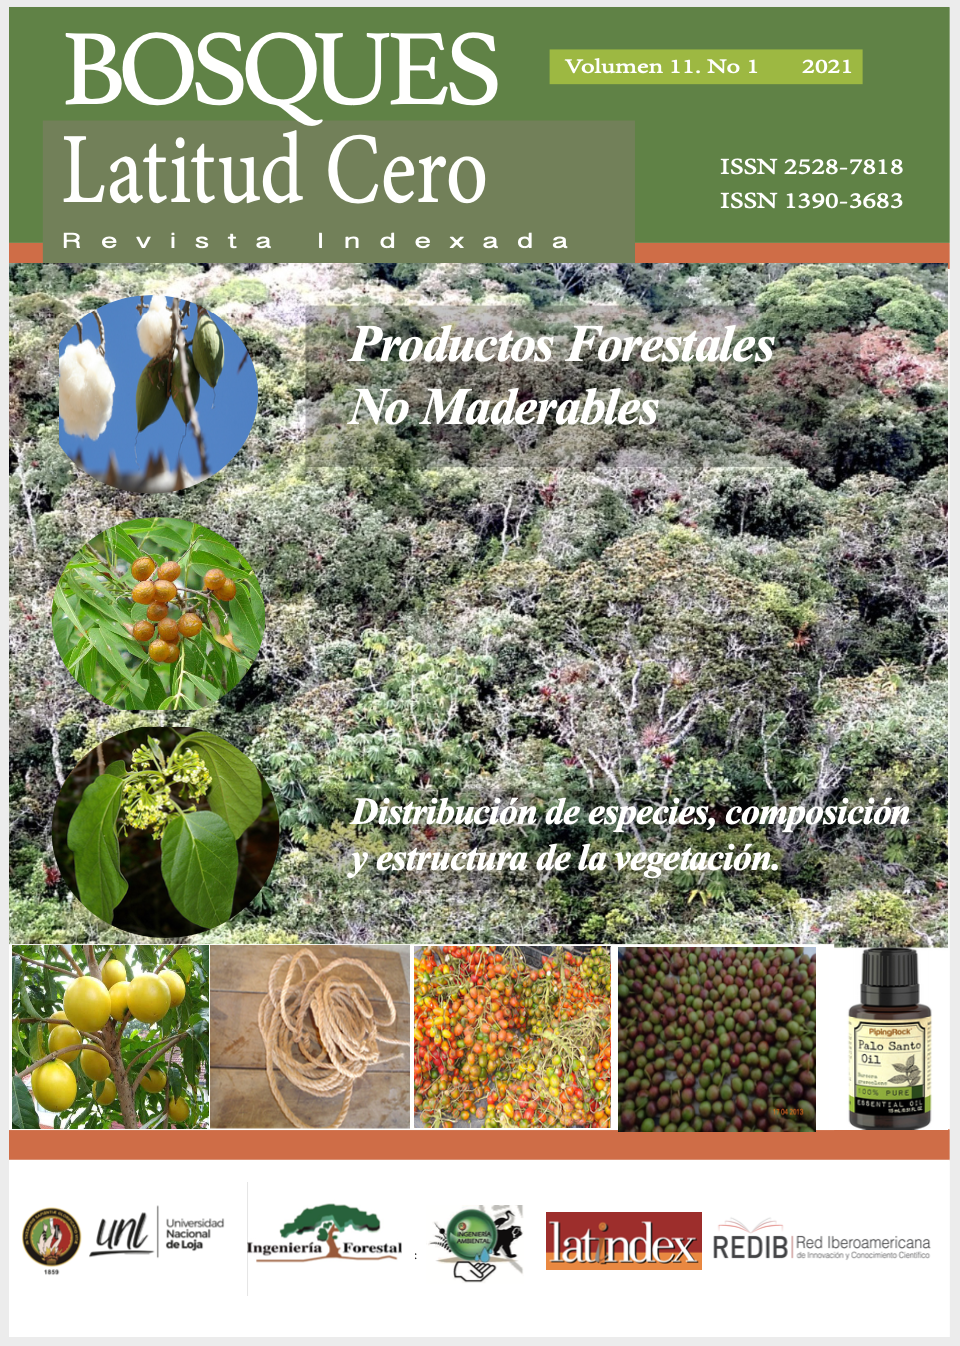 					Ver Vol. 11 Núm. 1 (2021): Productos Forestales no Maderables
				